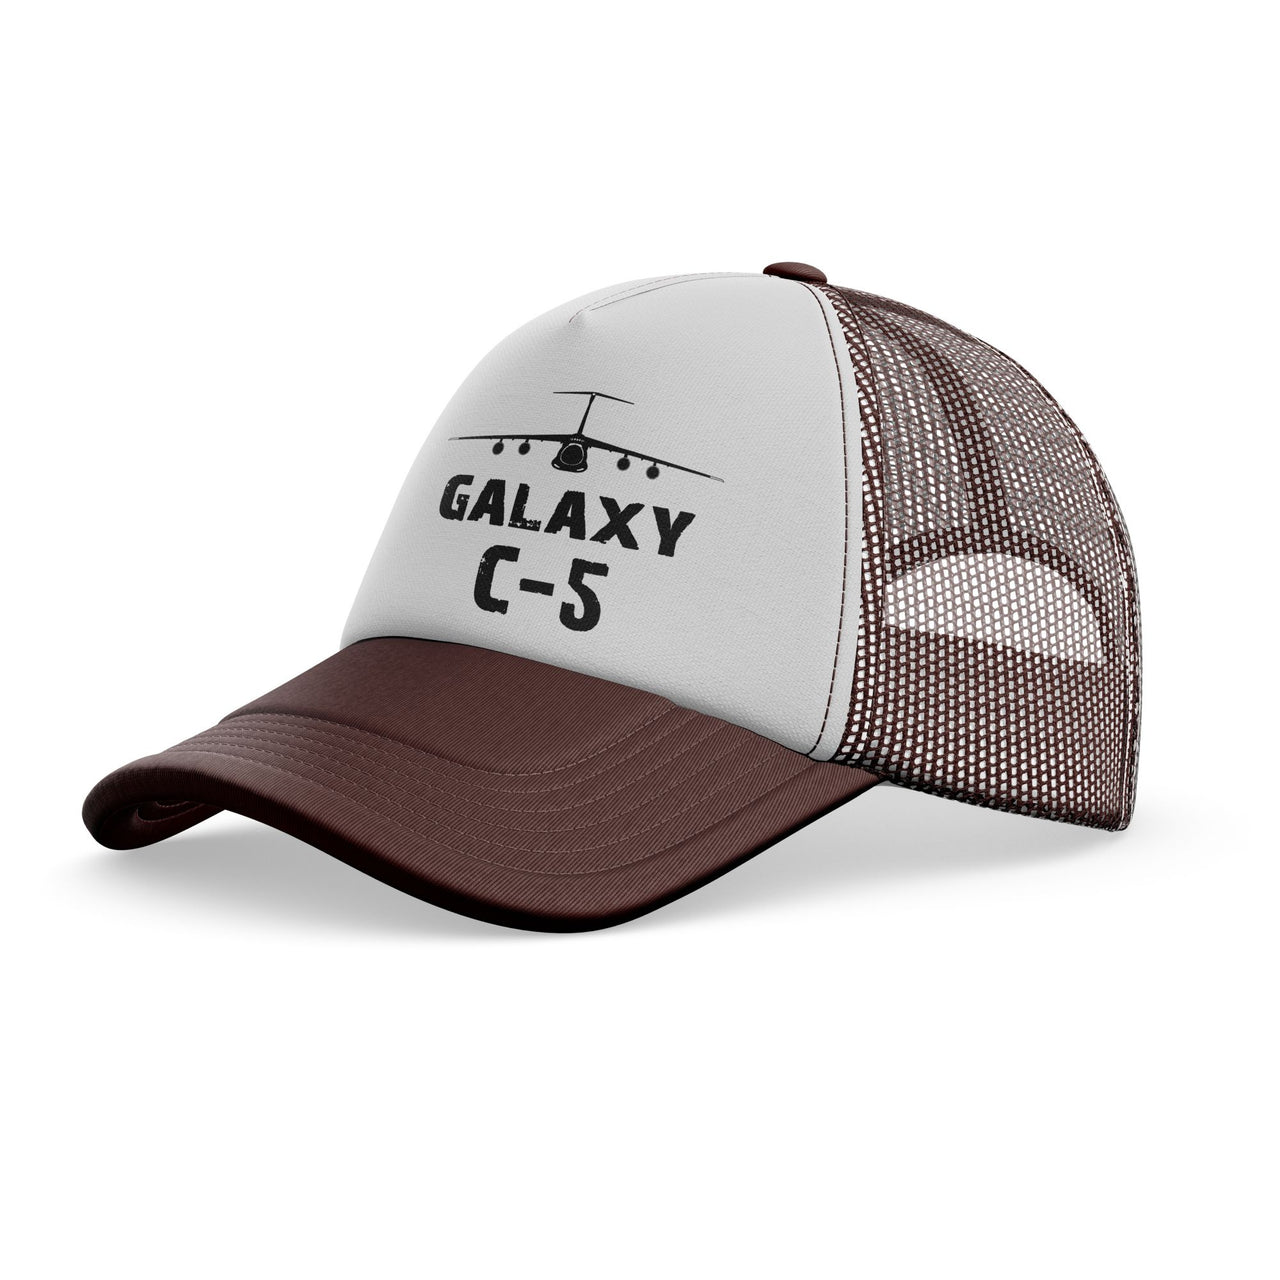 Galaxy C-5 & Plane Designed Trucker Caps & Hats